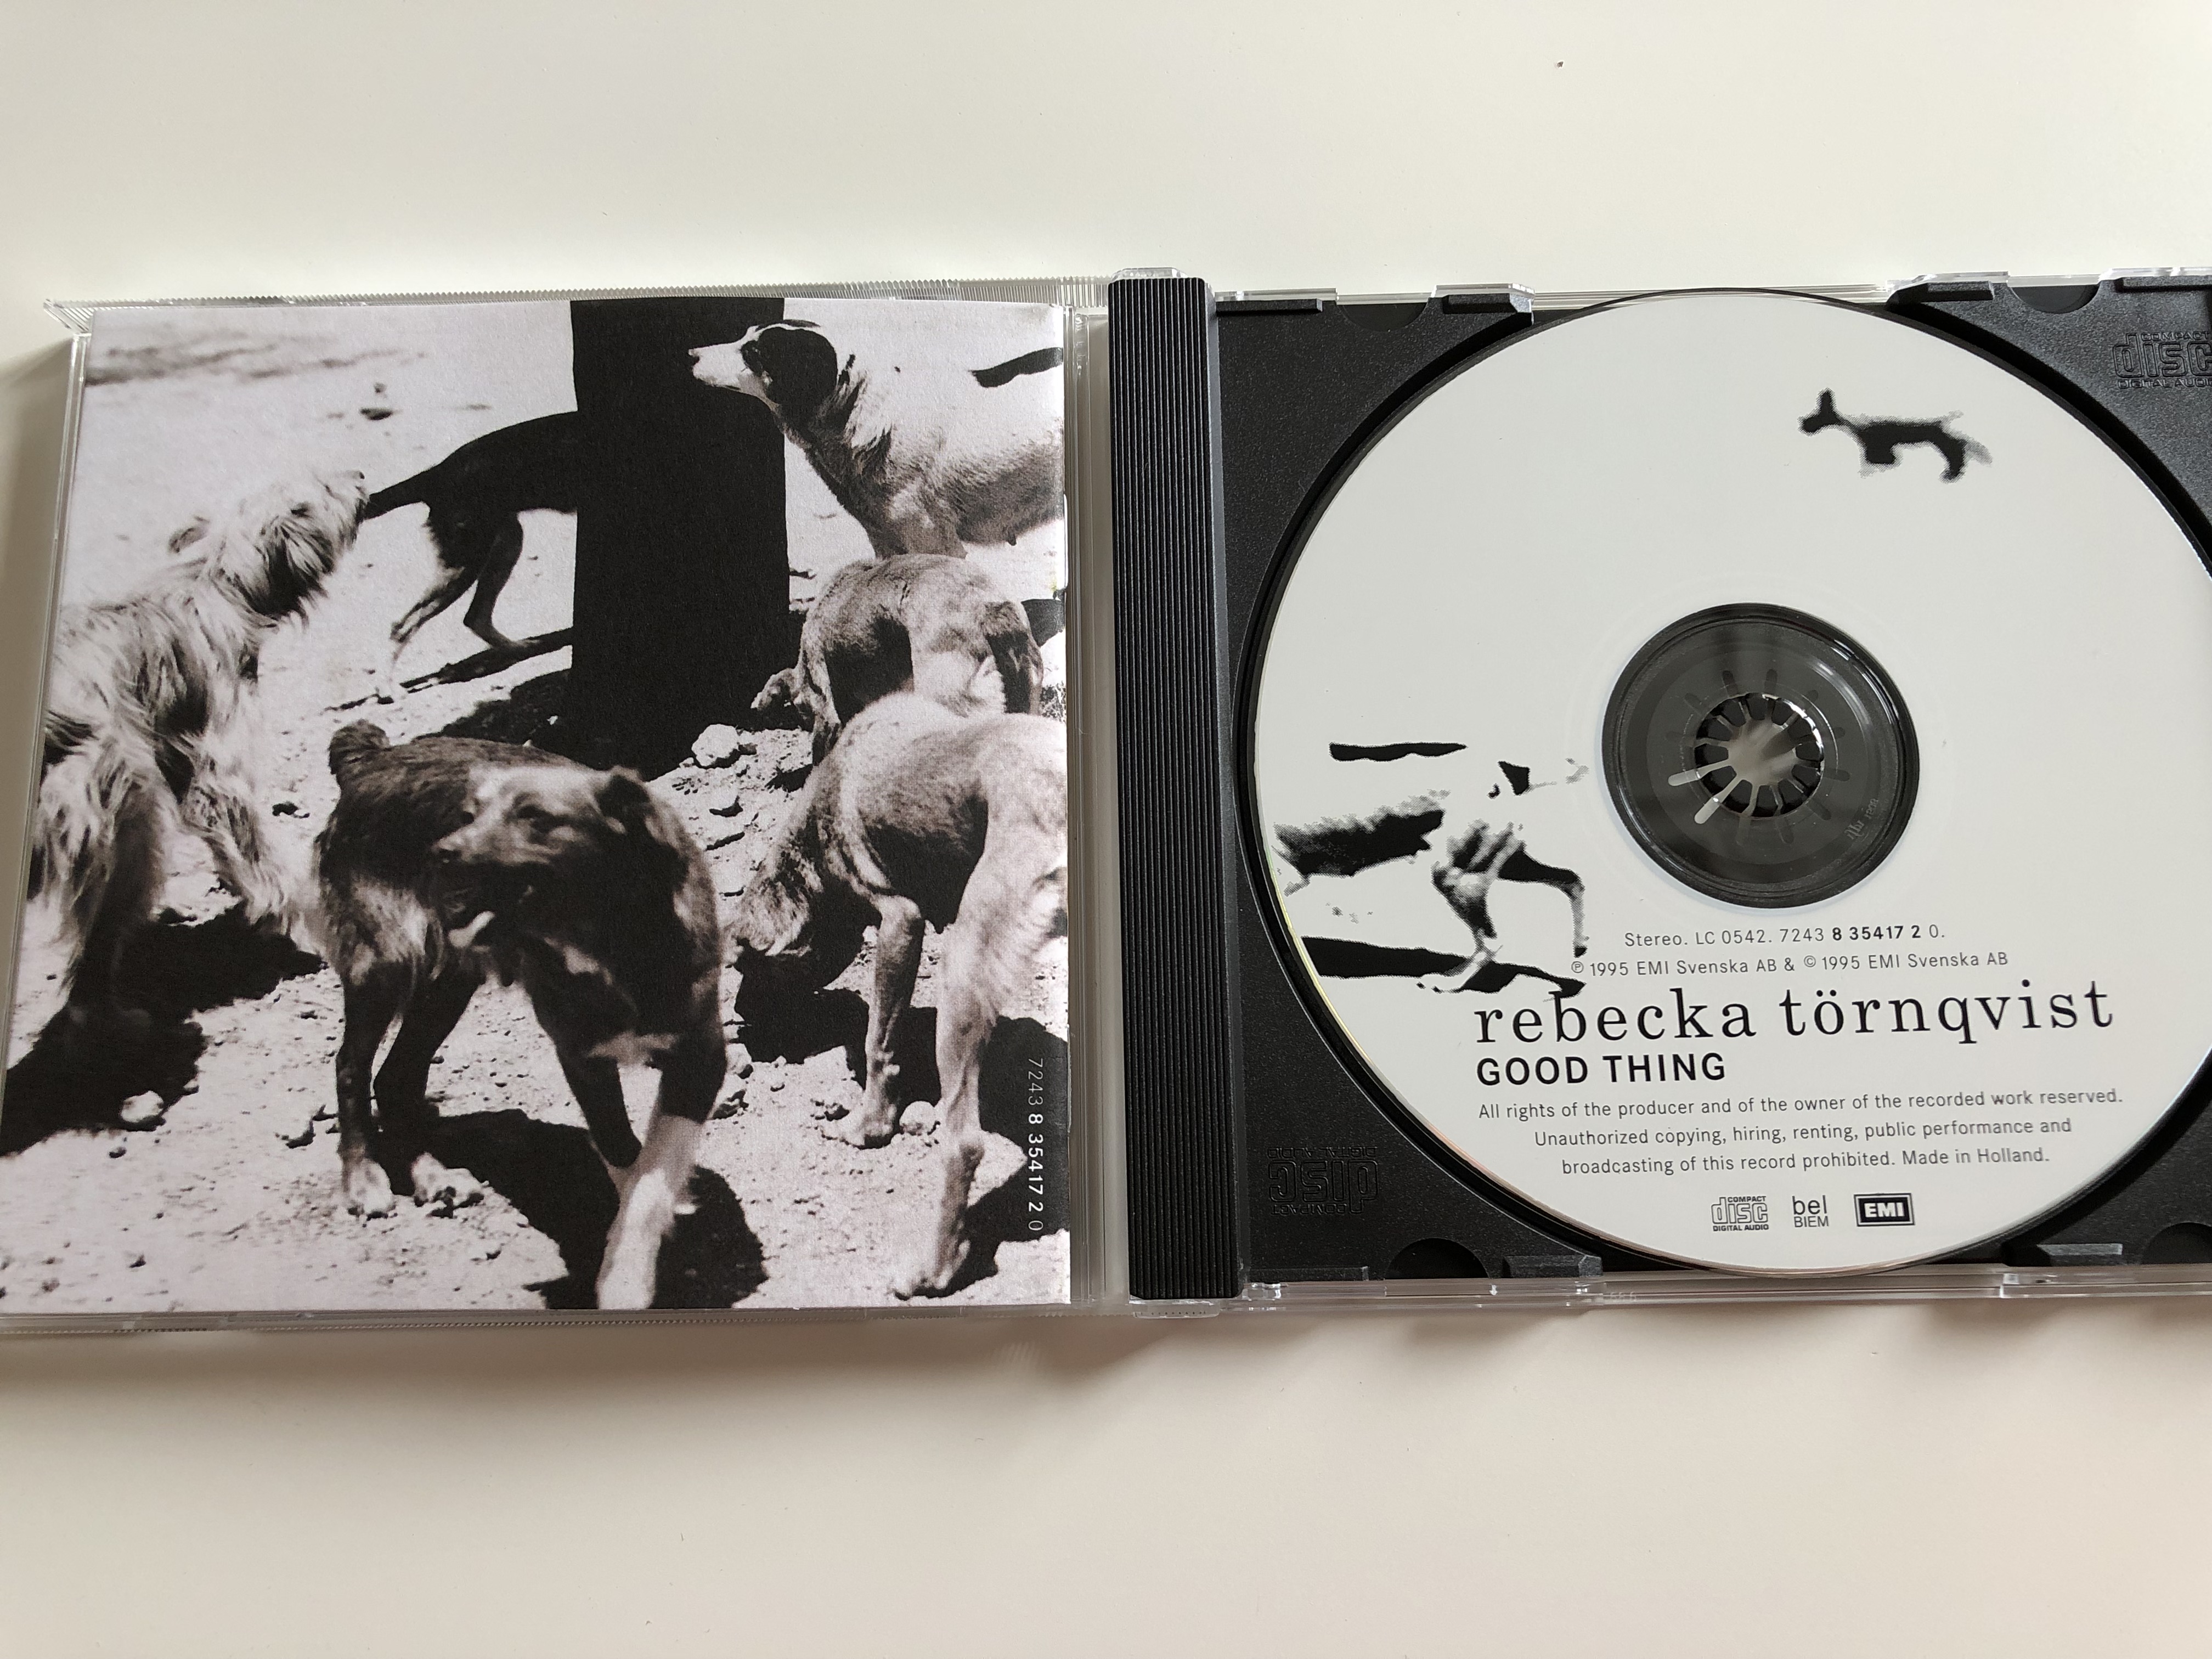 rebecka-t-rnqvist-good-thing-emi-audio-cd-1995-stereo-724383541720-9-.jpg